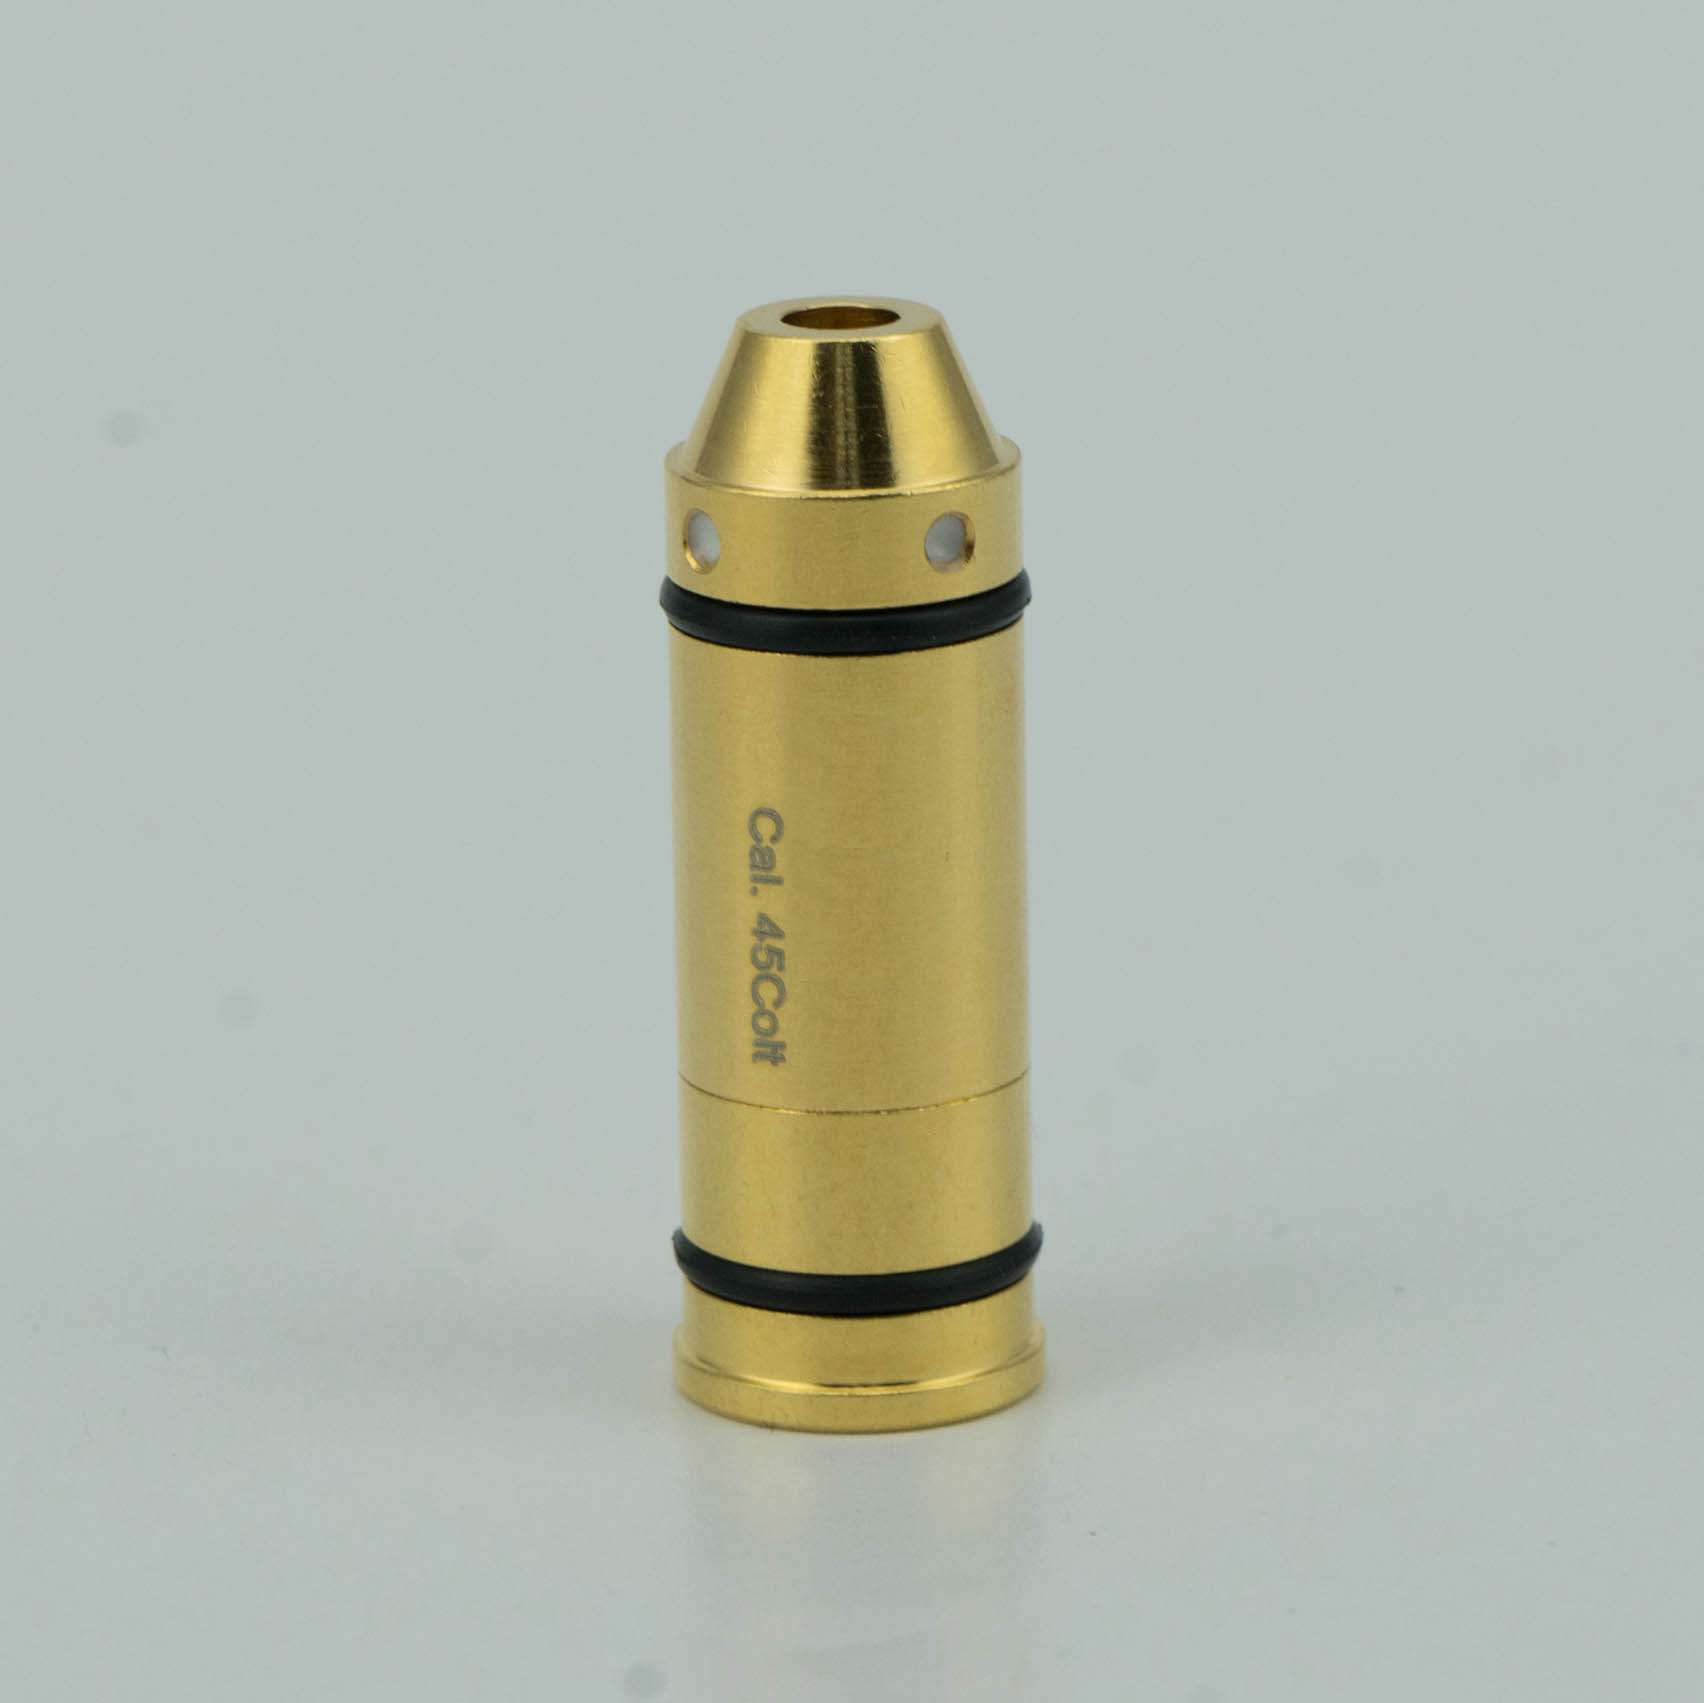 Bullet Laser Traget Tainer 45 Colt Pallottola laser per allenamento con successo laser